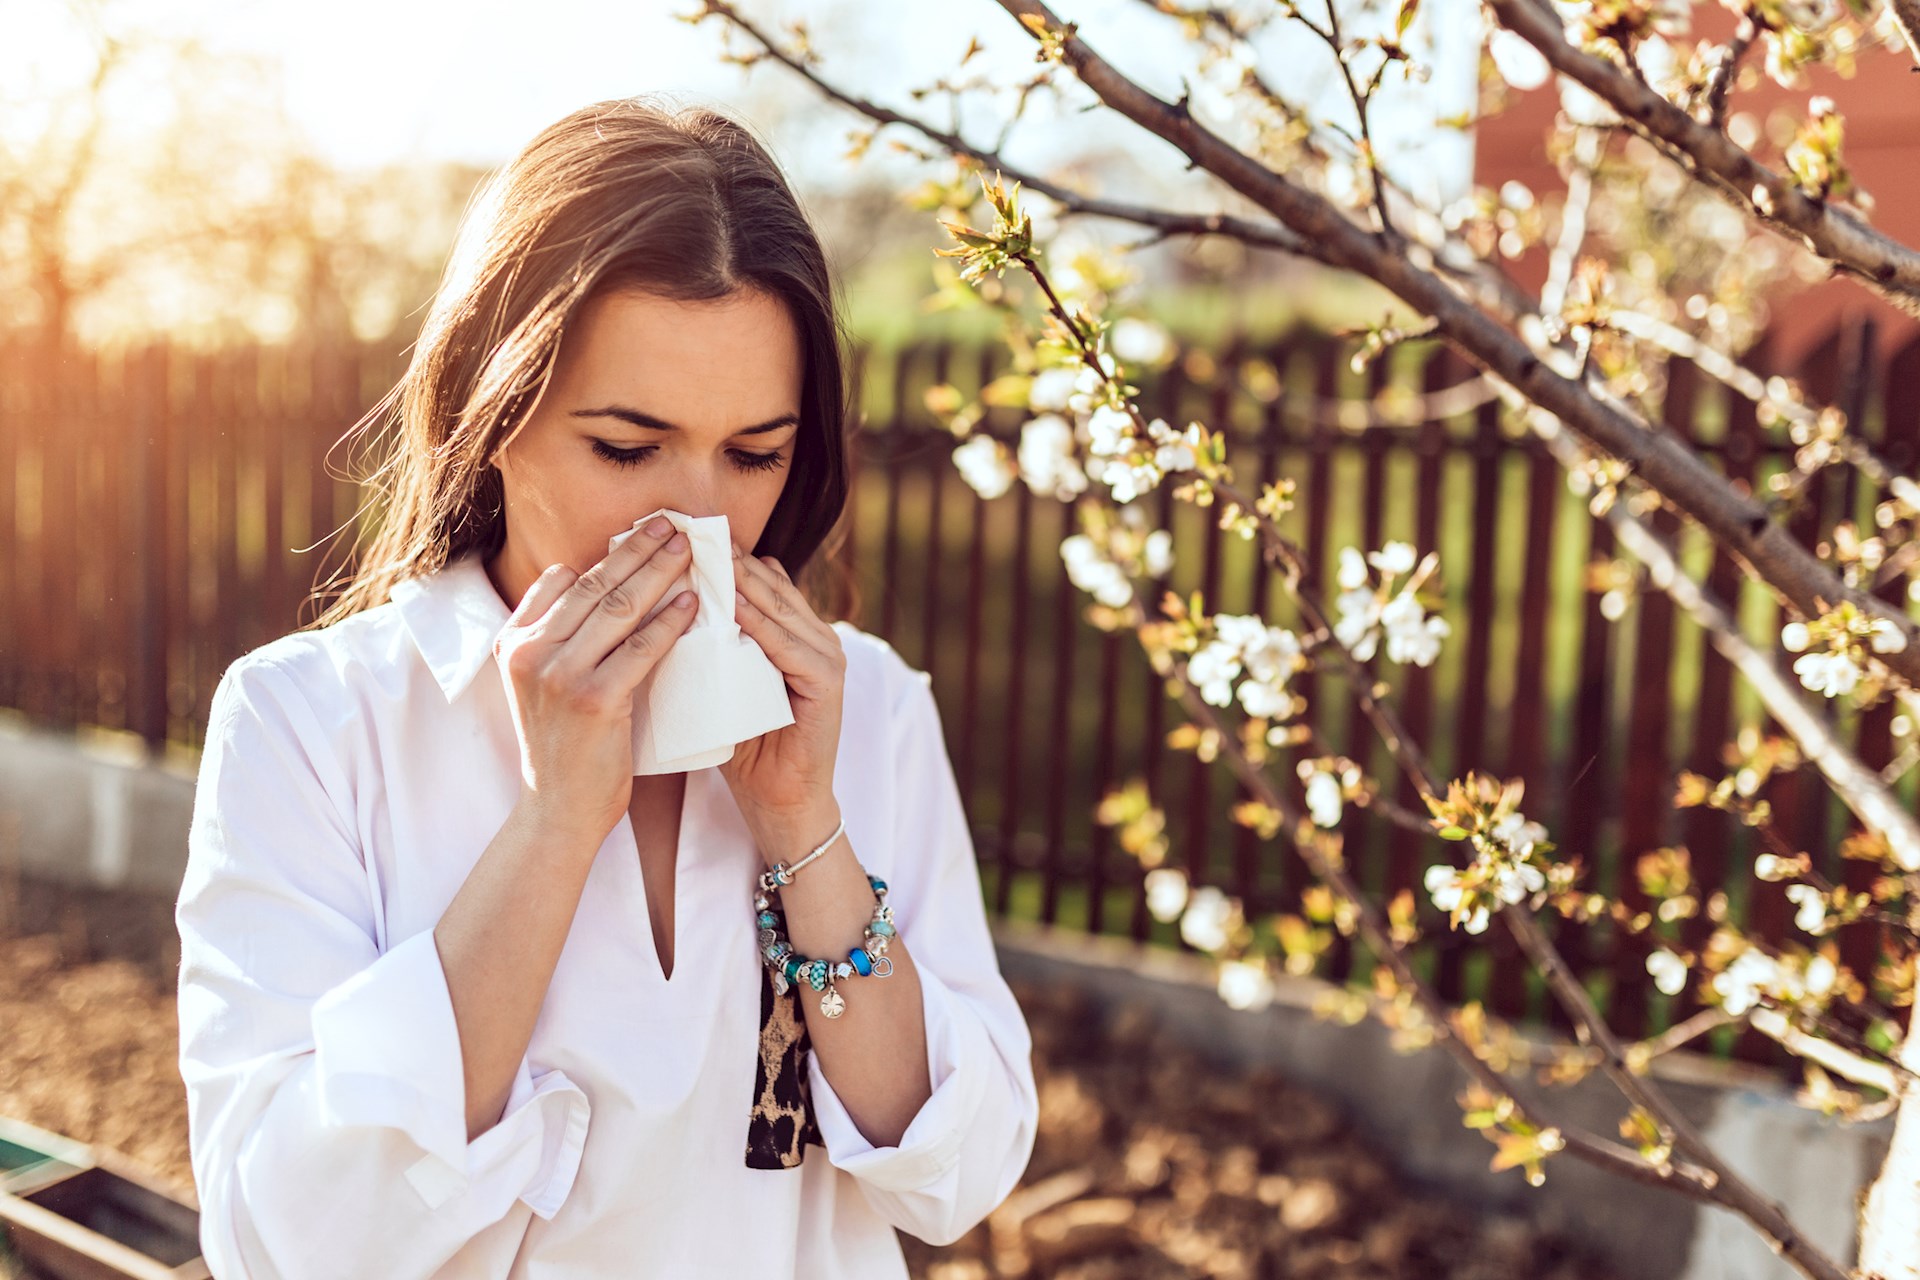 Spring allergies: Nip them in the bud